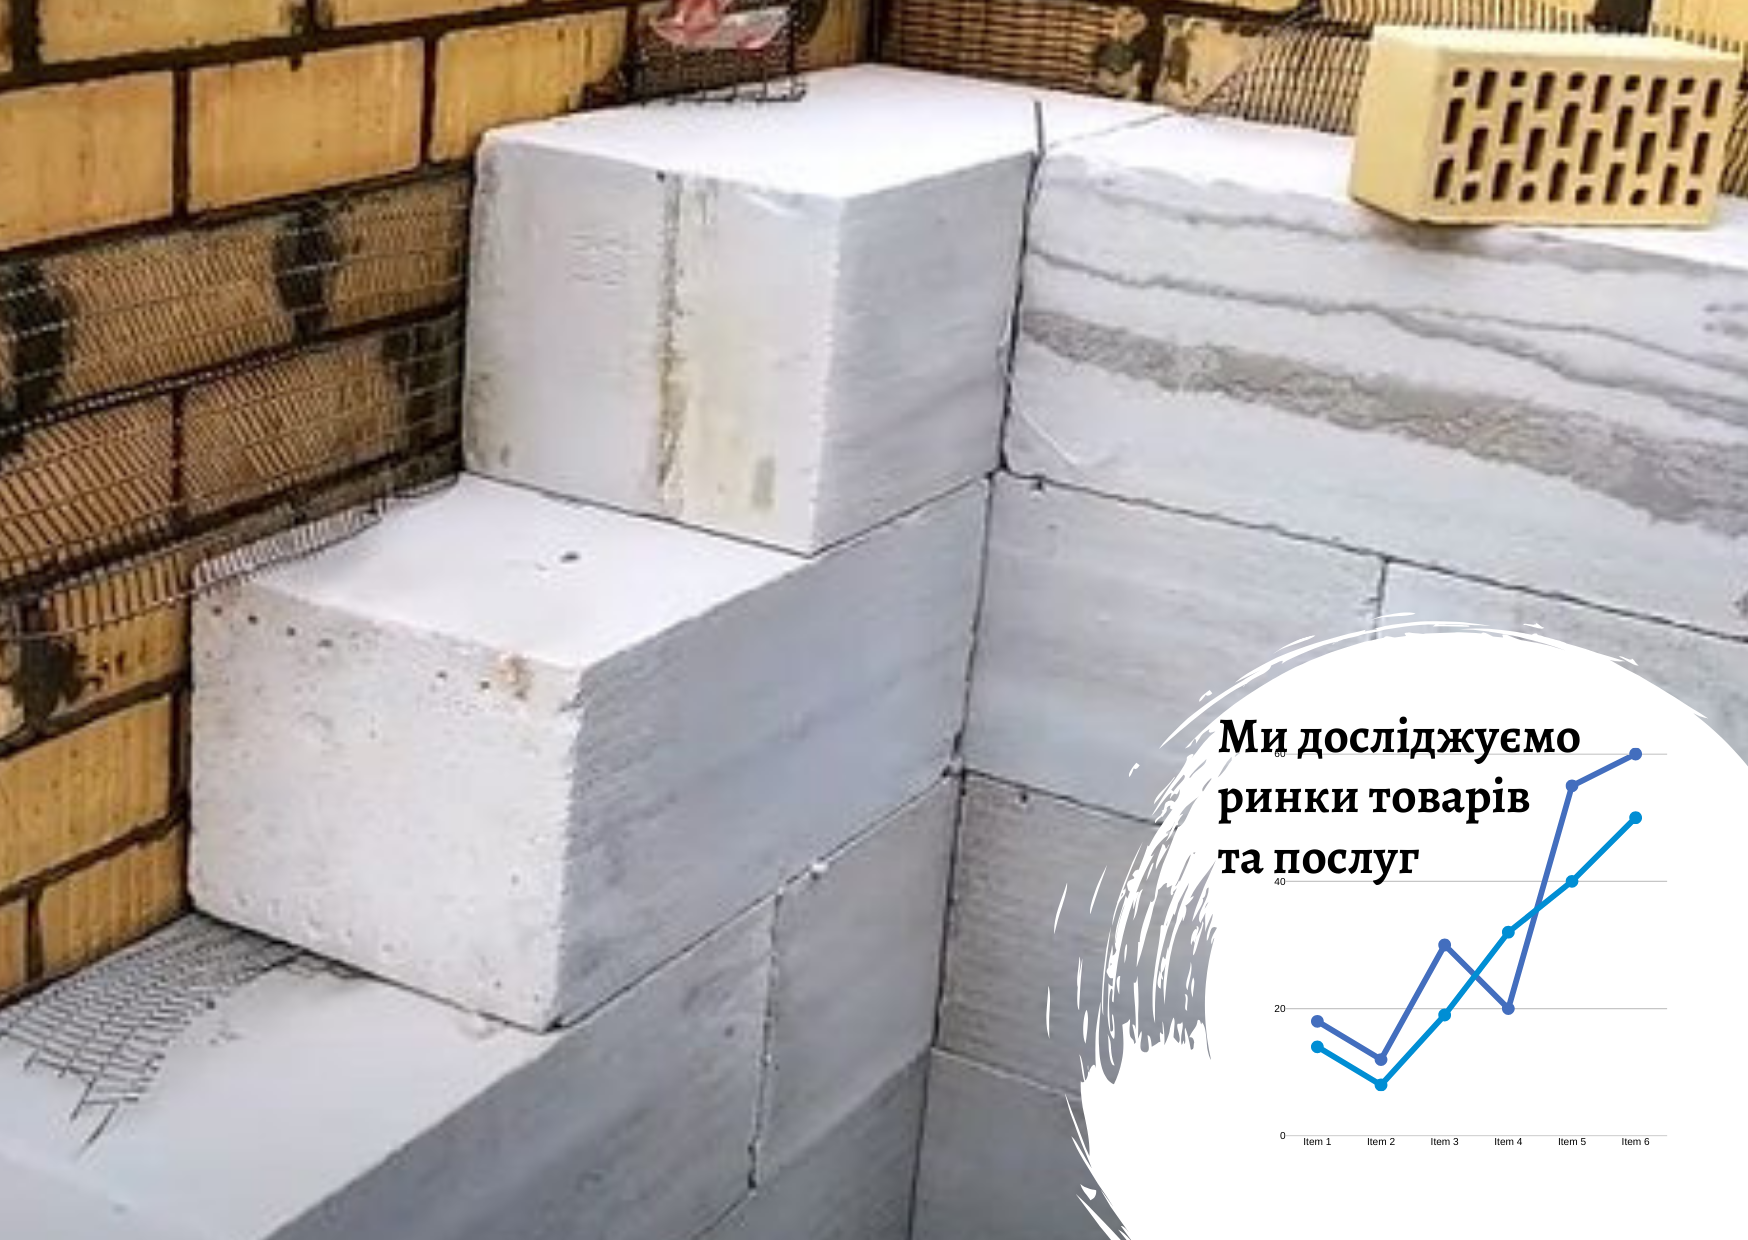 Ukrainian construction materials market: factors and trends